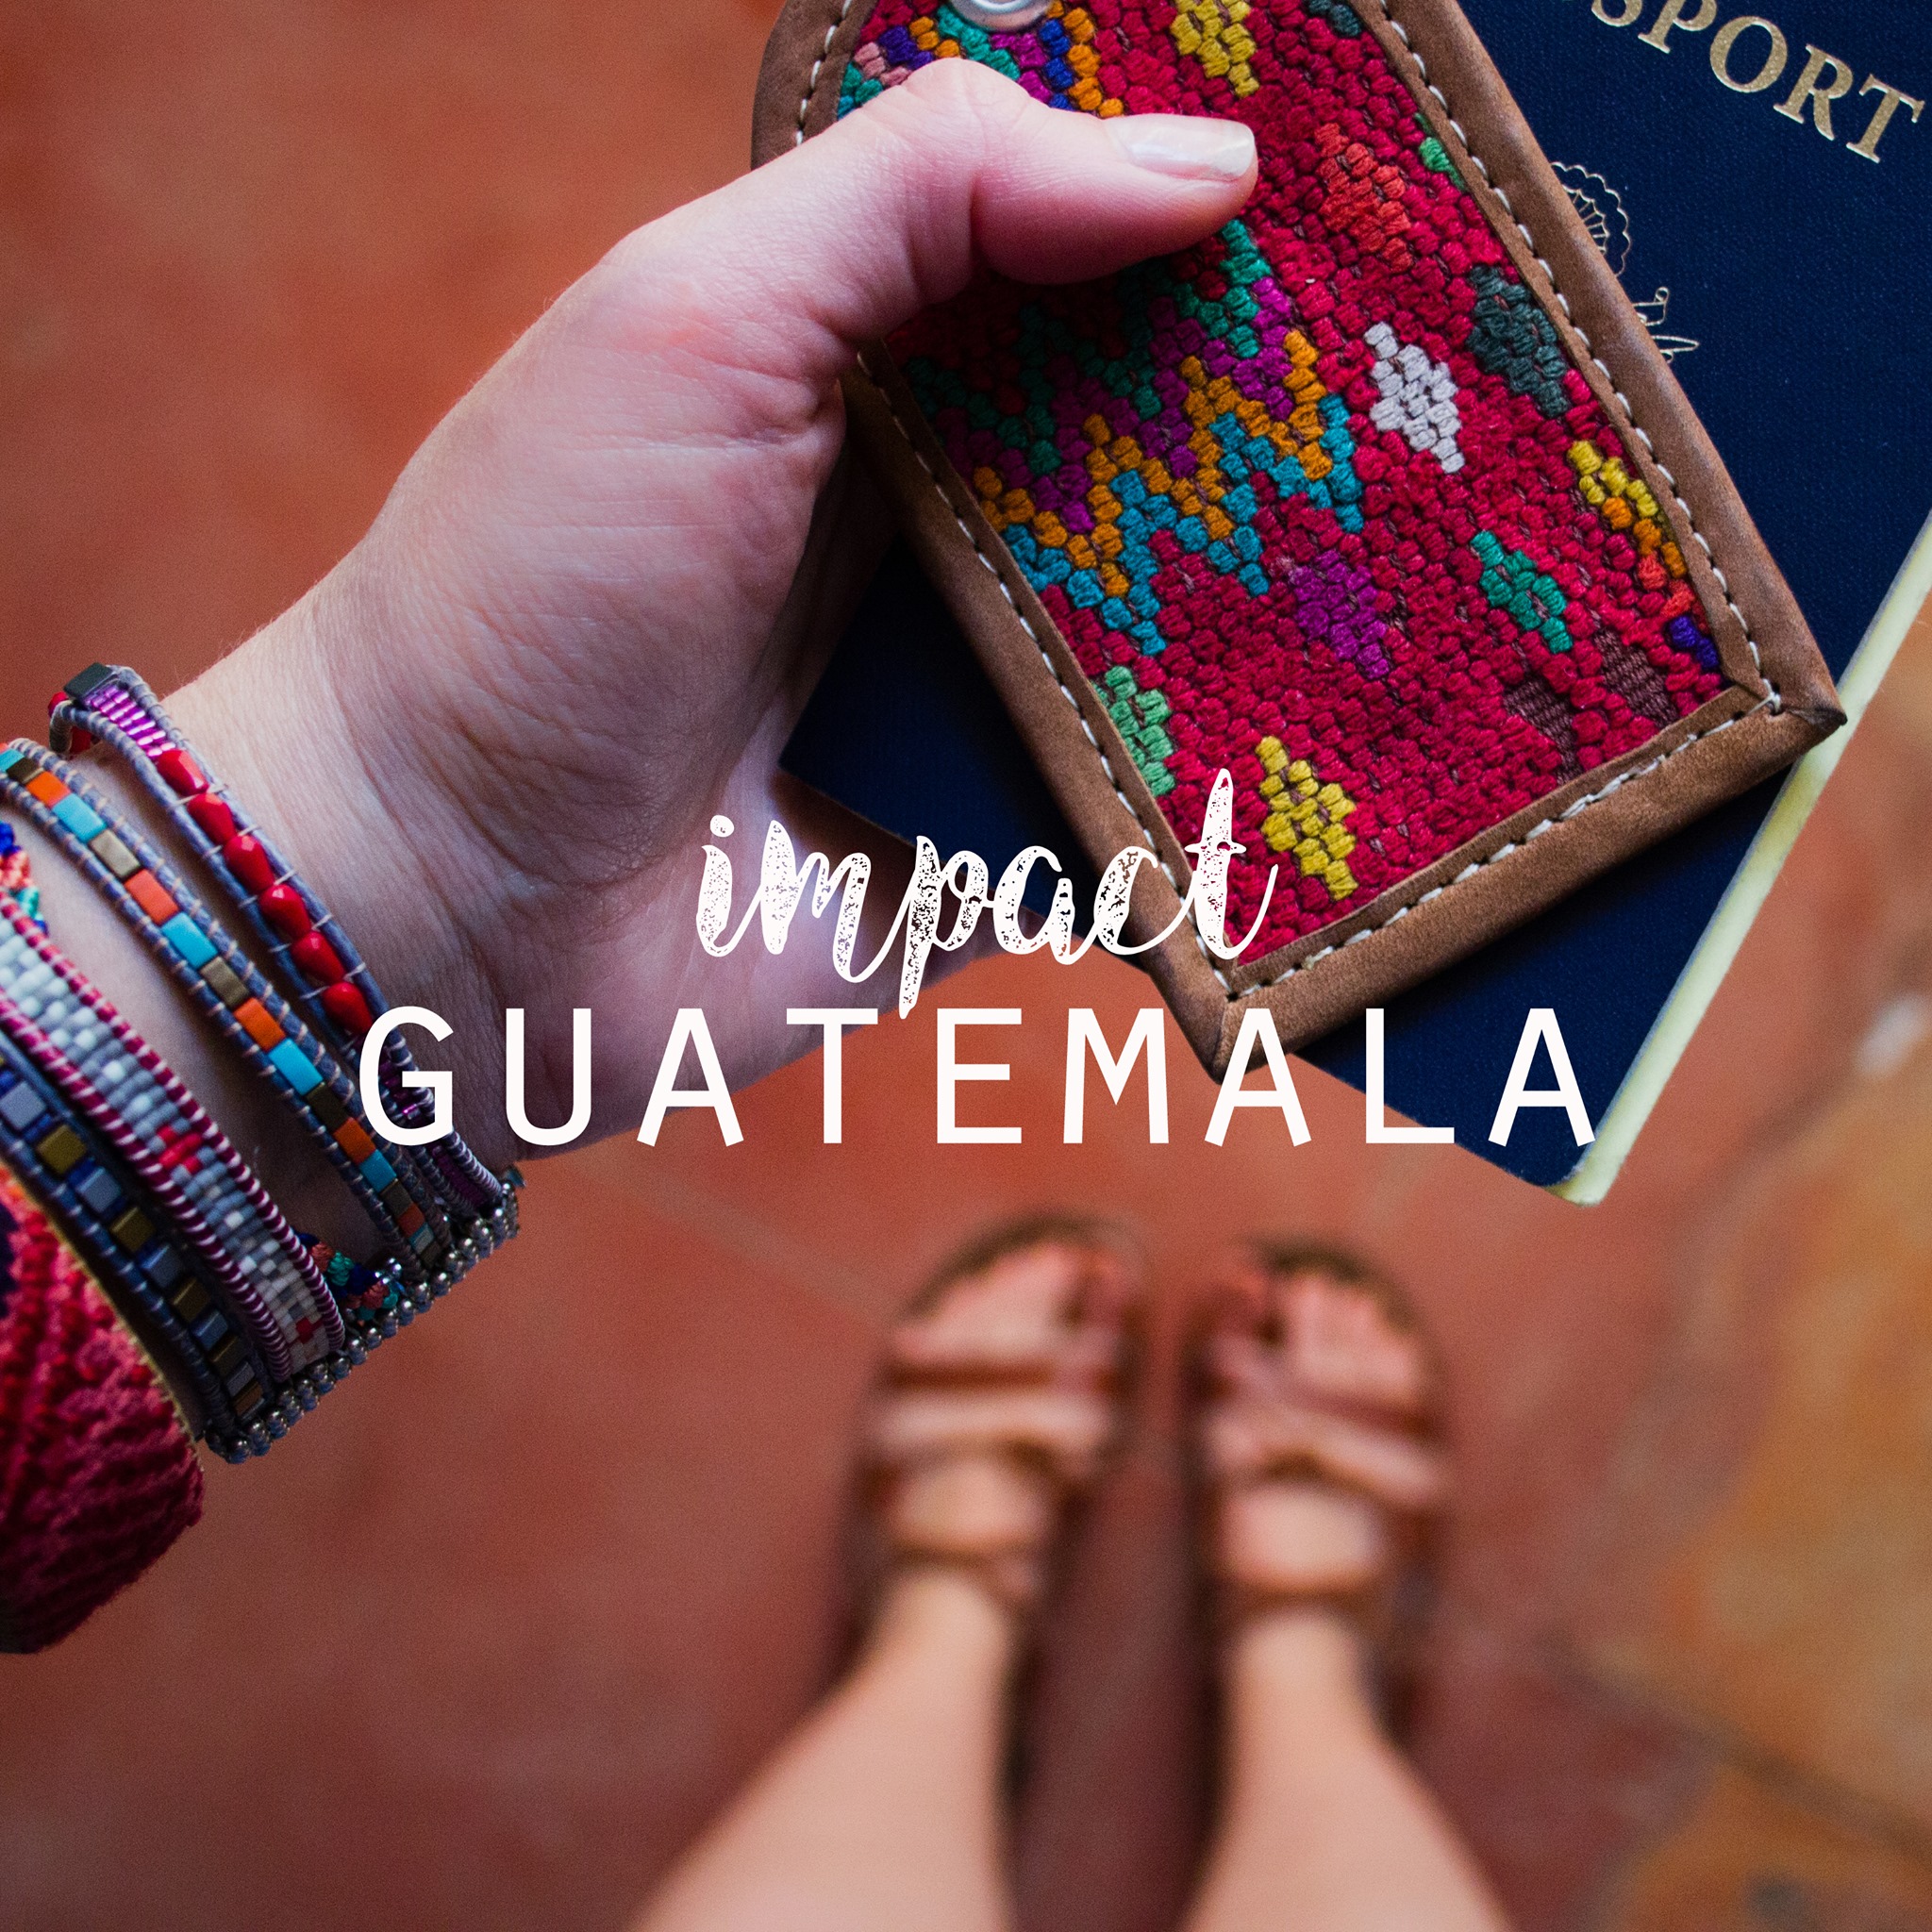 Impact Guatemala Popup Shop!